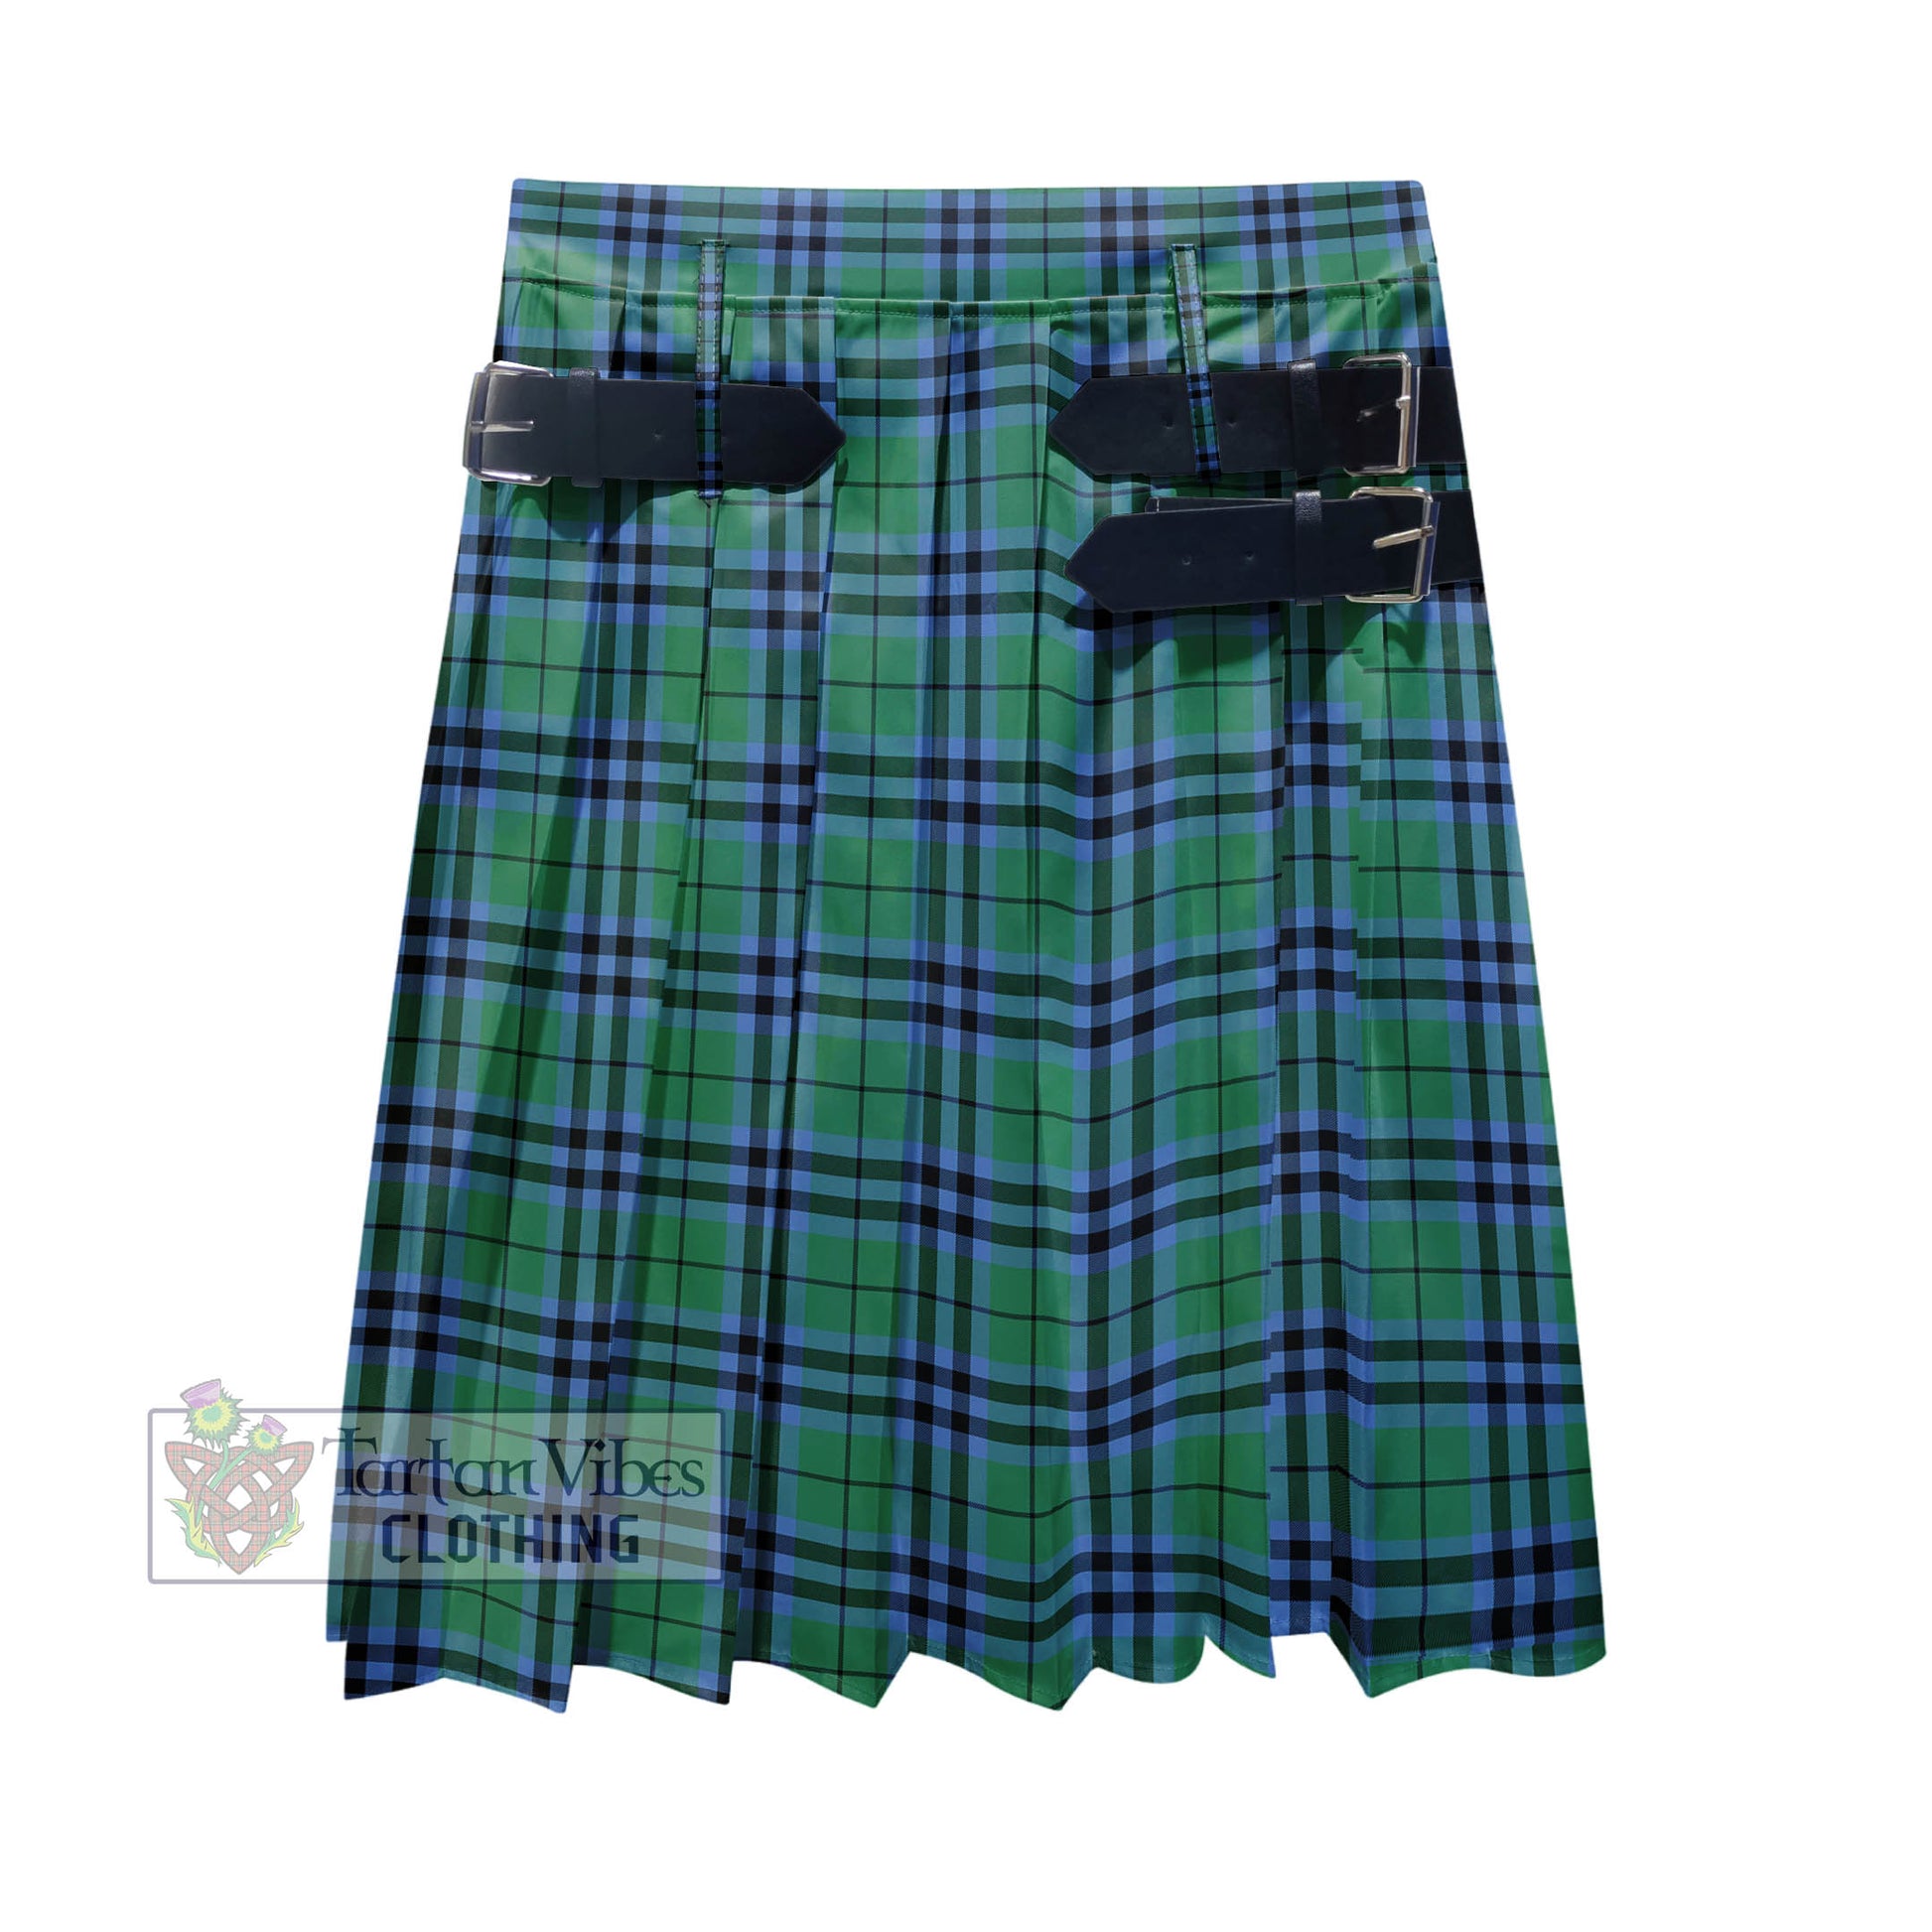 Tartan Vibes Clothing Keith Ancient Tartan Men's Pleated Skirt - Fashion Casual Retro Scottish Style